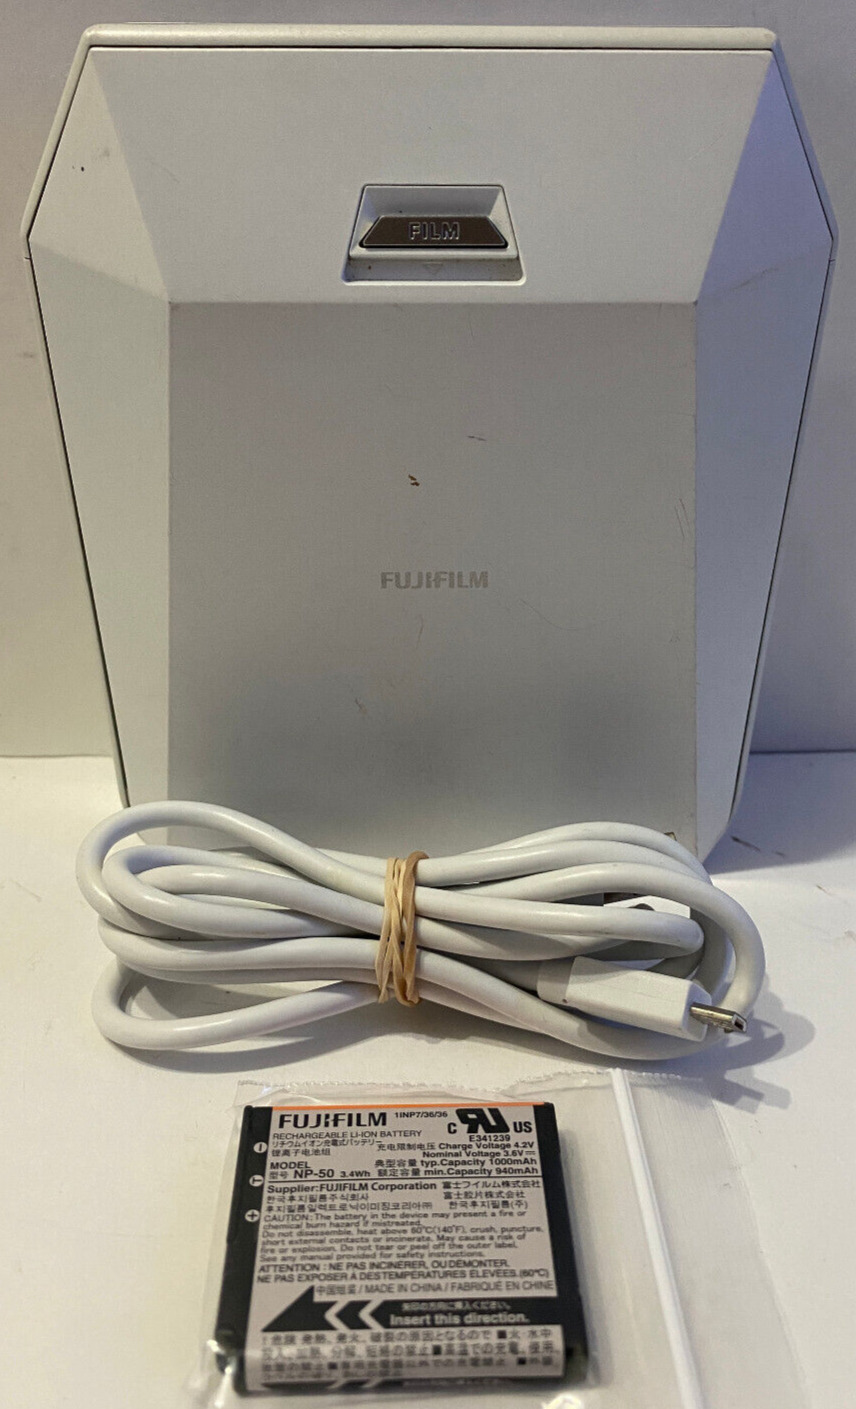 Fujifilm Instax SP-3 Portable Wireless Mobile Printer - White (NO FILM)